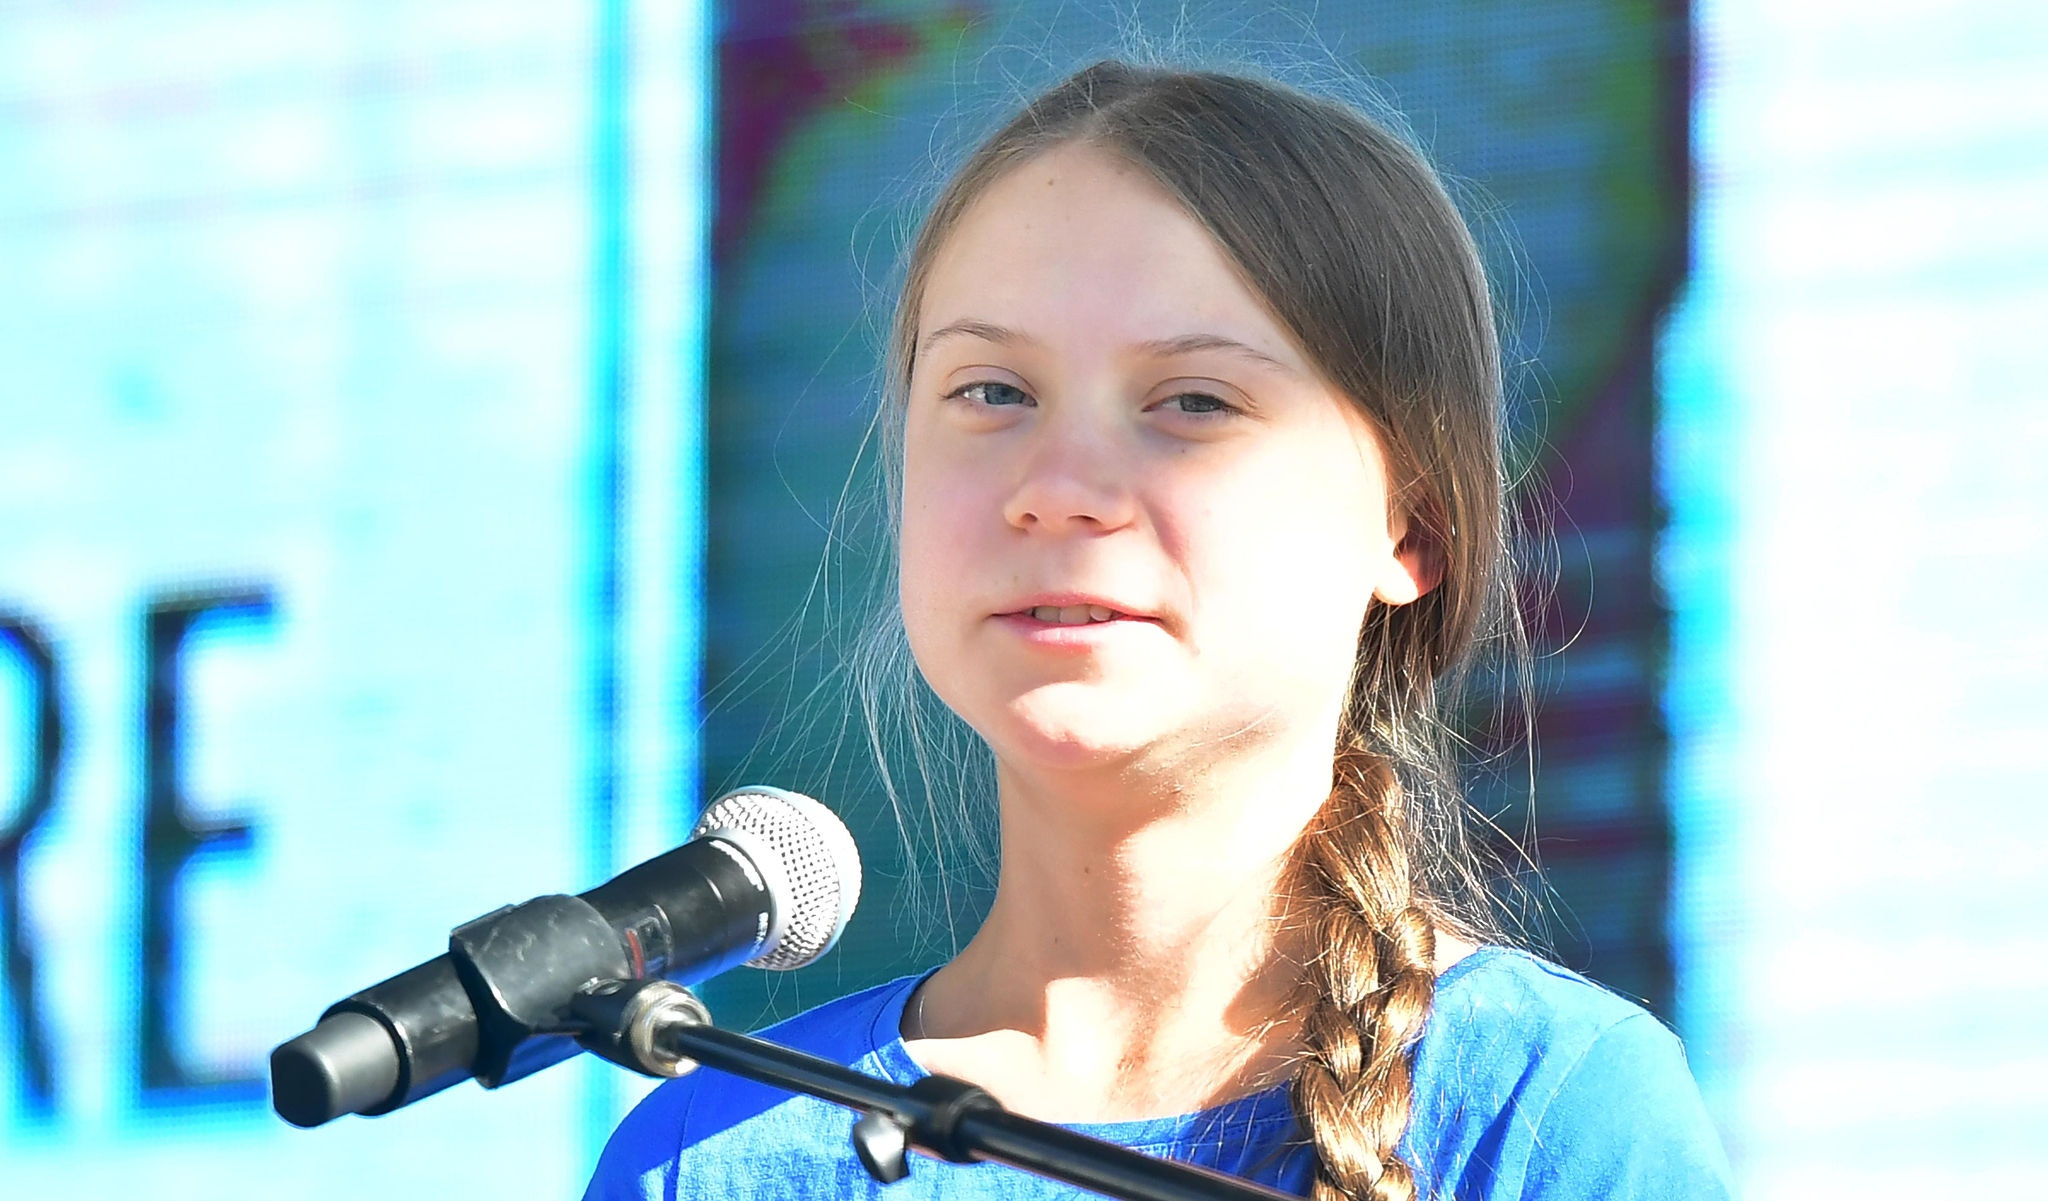 Ativista Greta Thunberg